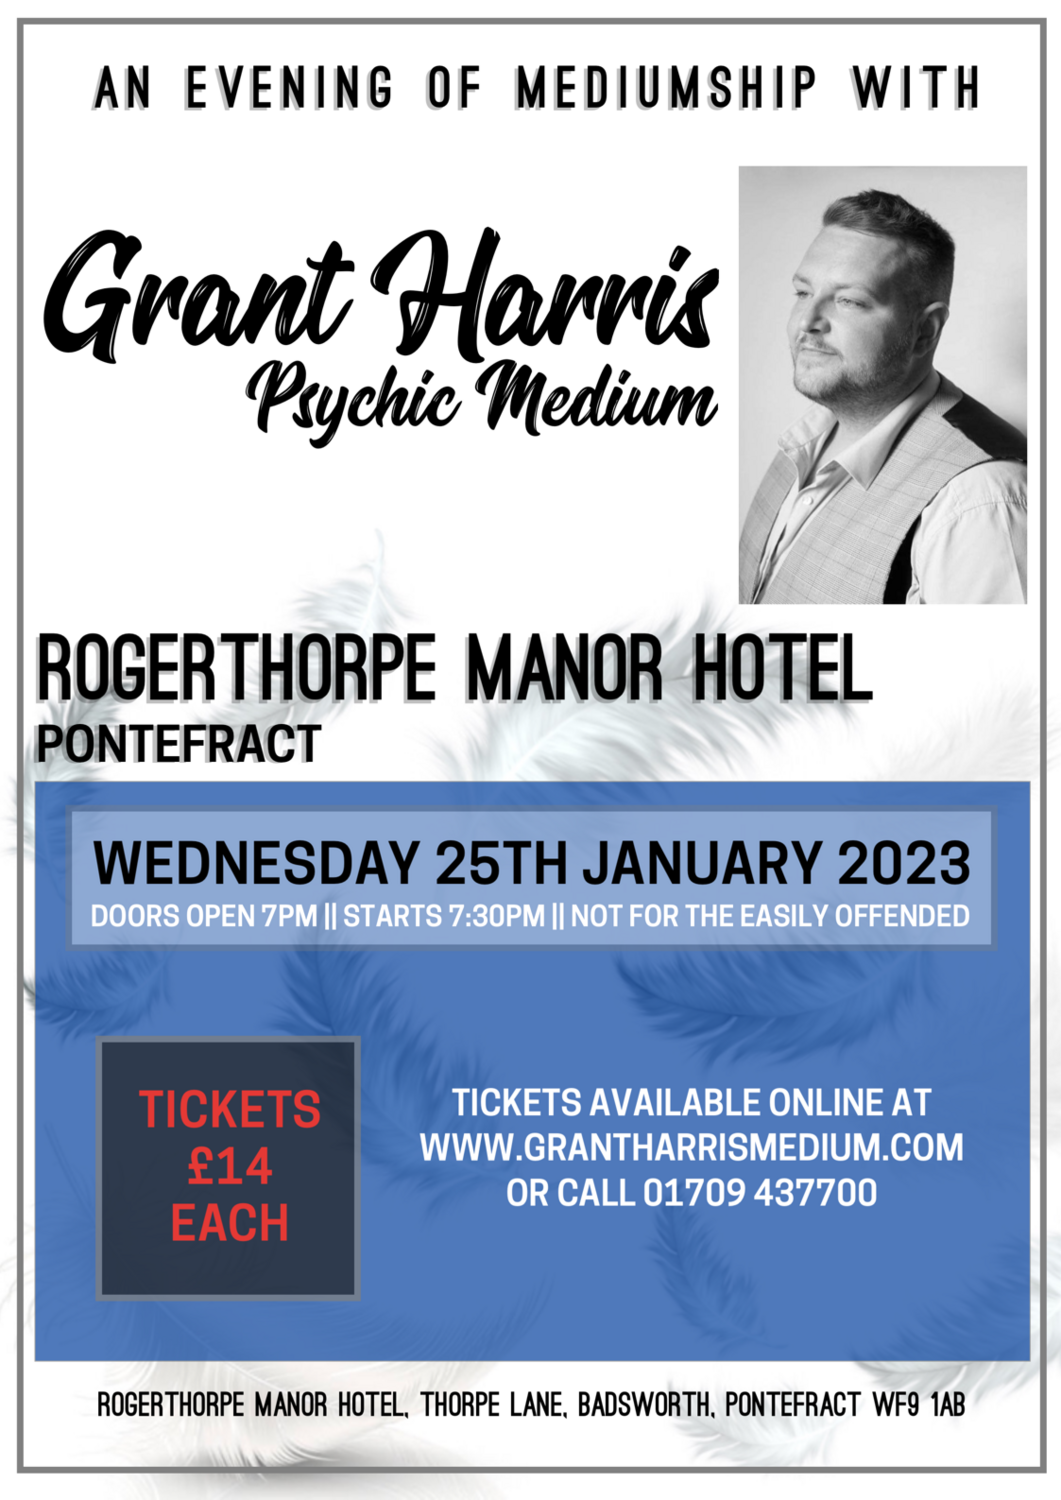 Rogerthorpe Manor Hotel, Pontefract, Wednesday 25th January 2023